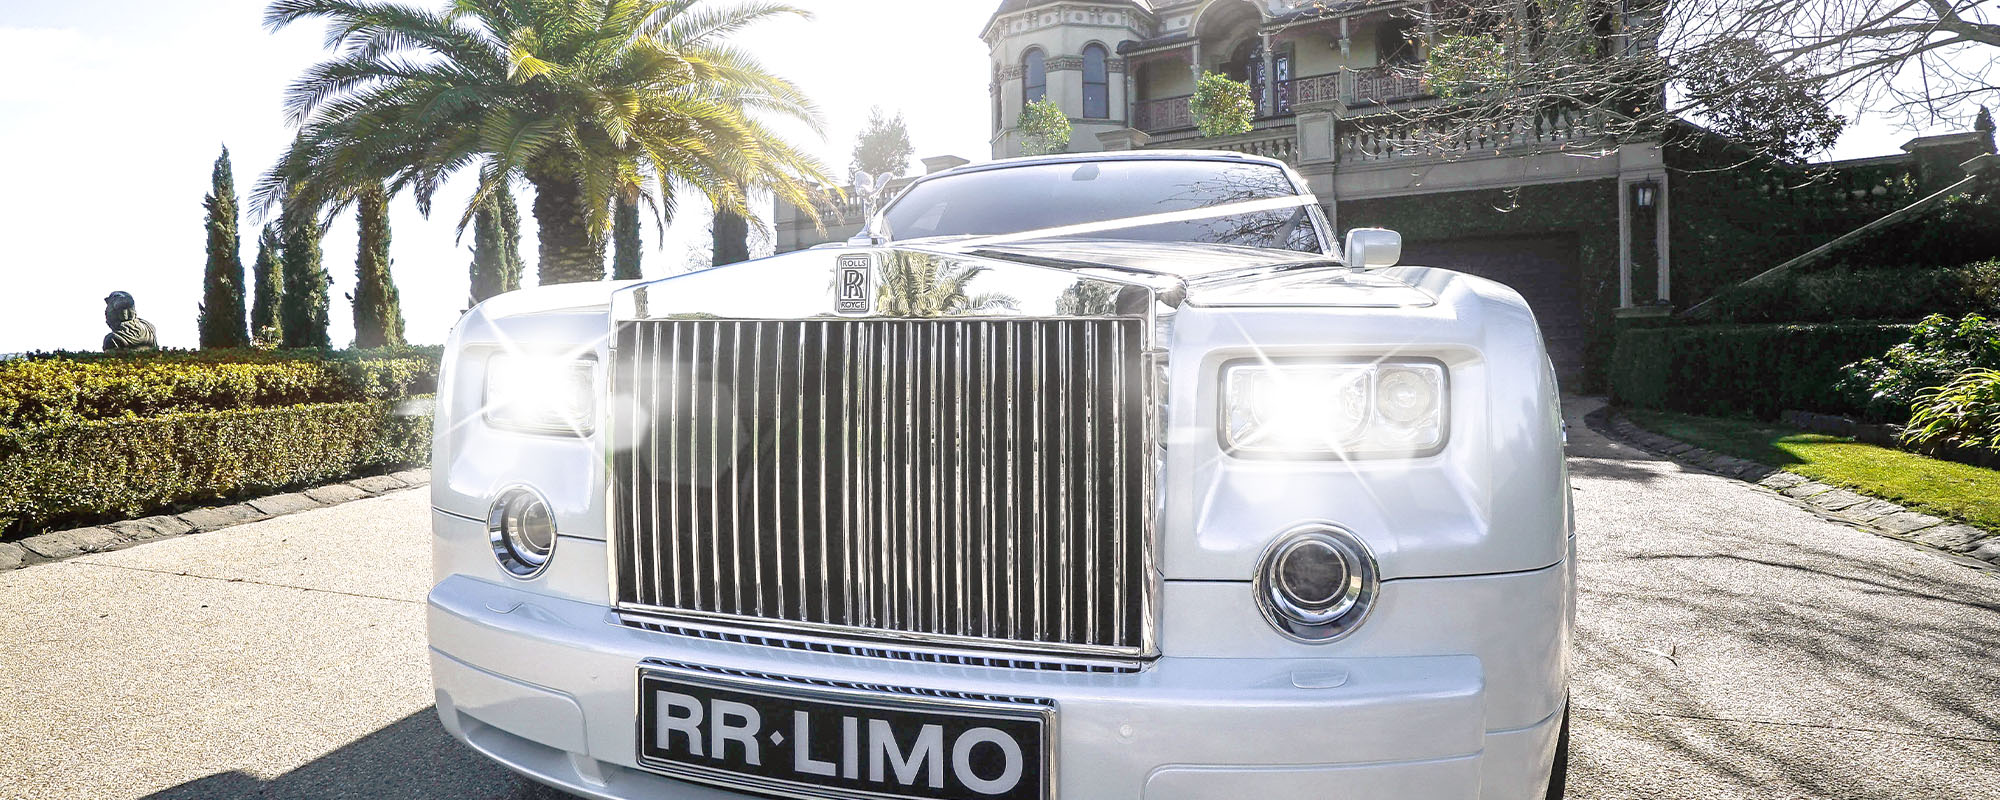 Rolls ROyce Limousine For Hire Melbourne